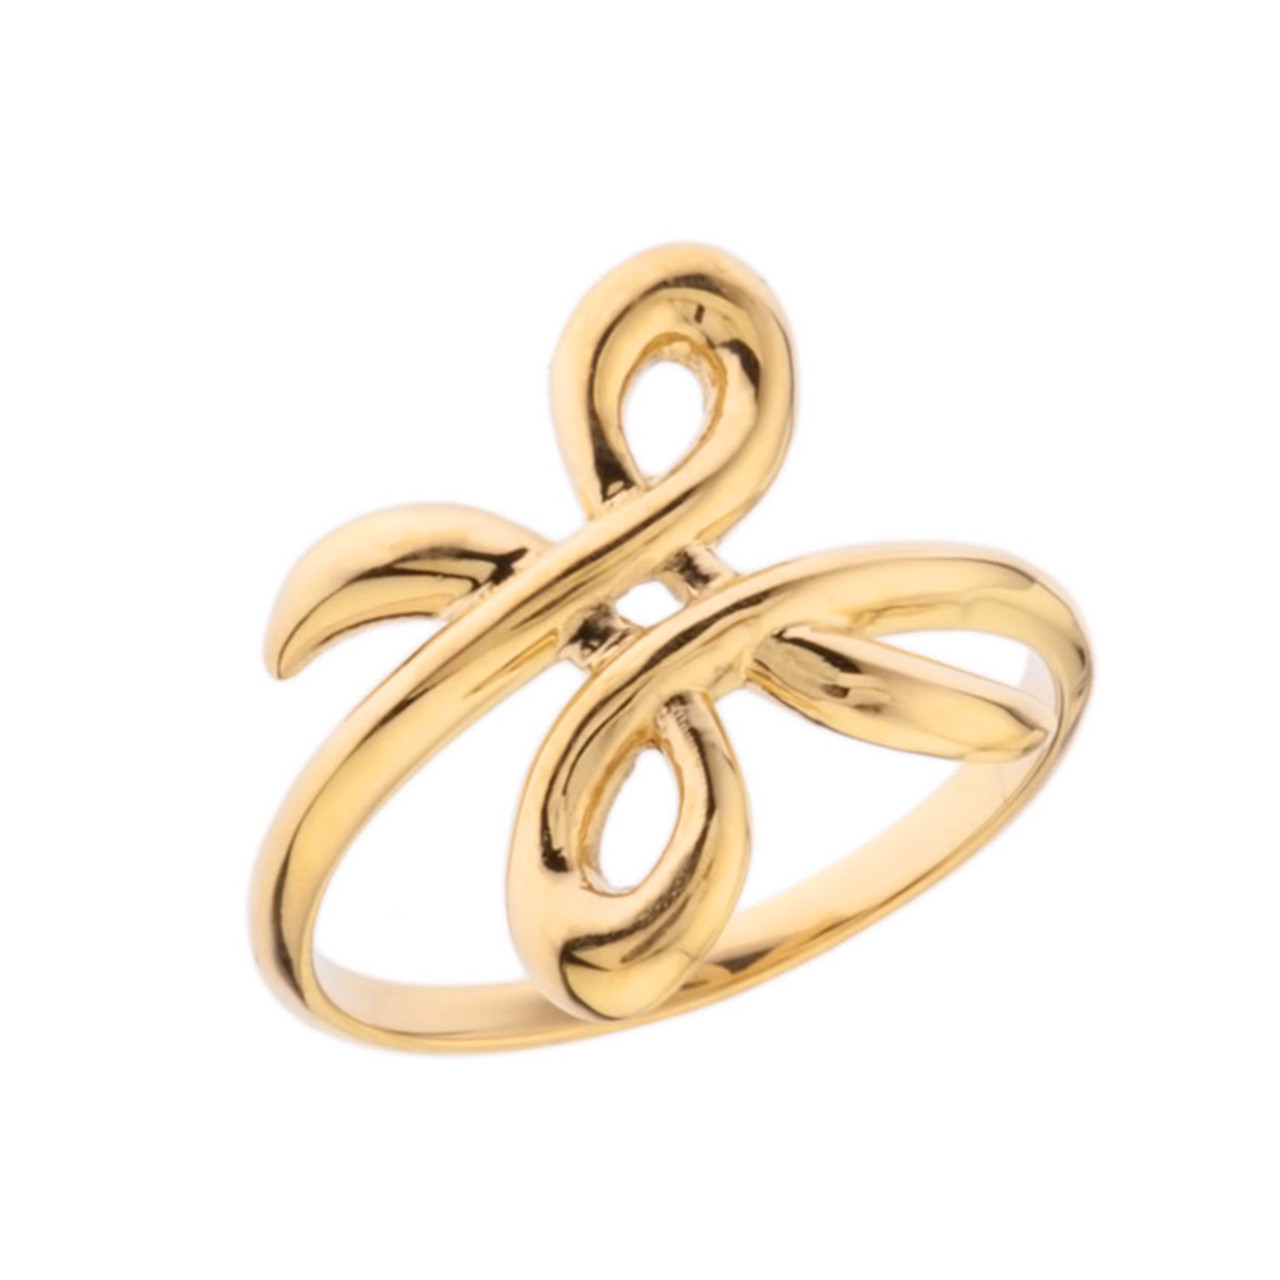 Zibu Friendship Symbol Ring in Yellow Gold